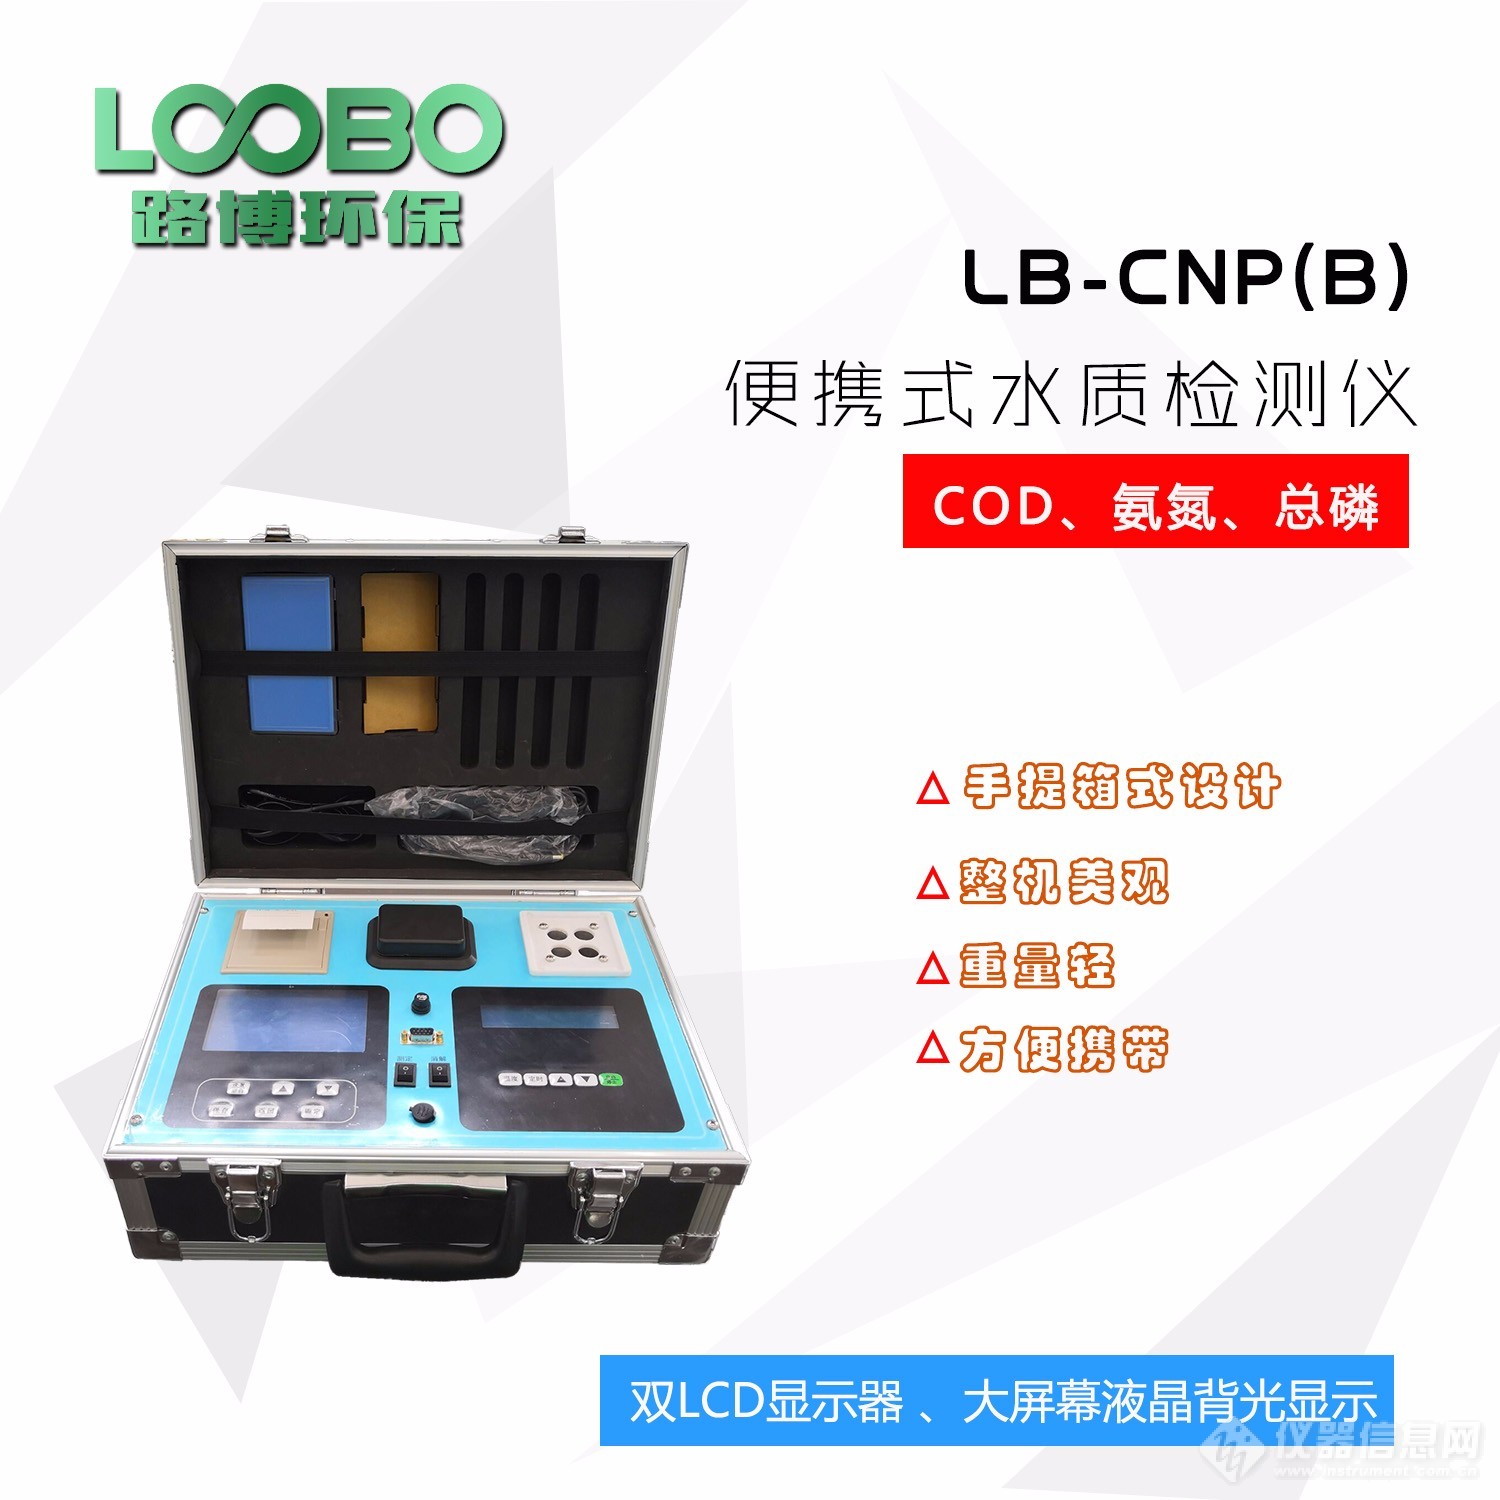 LB-CNP(B) 三合一型便携式多参数水质检测仪.jpg